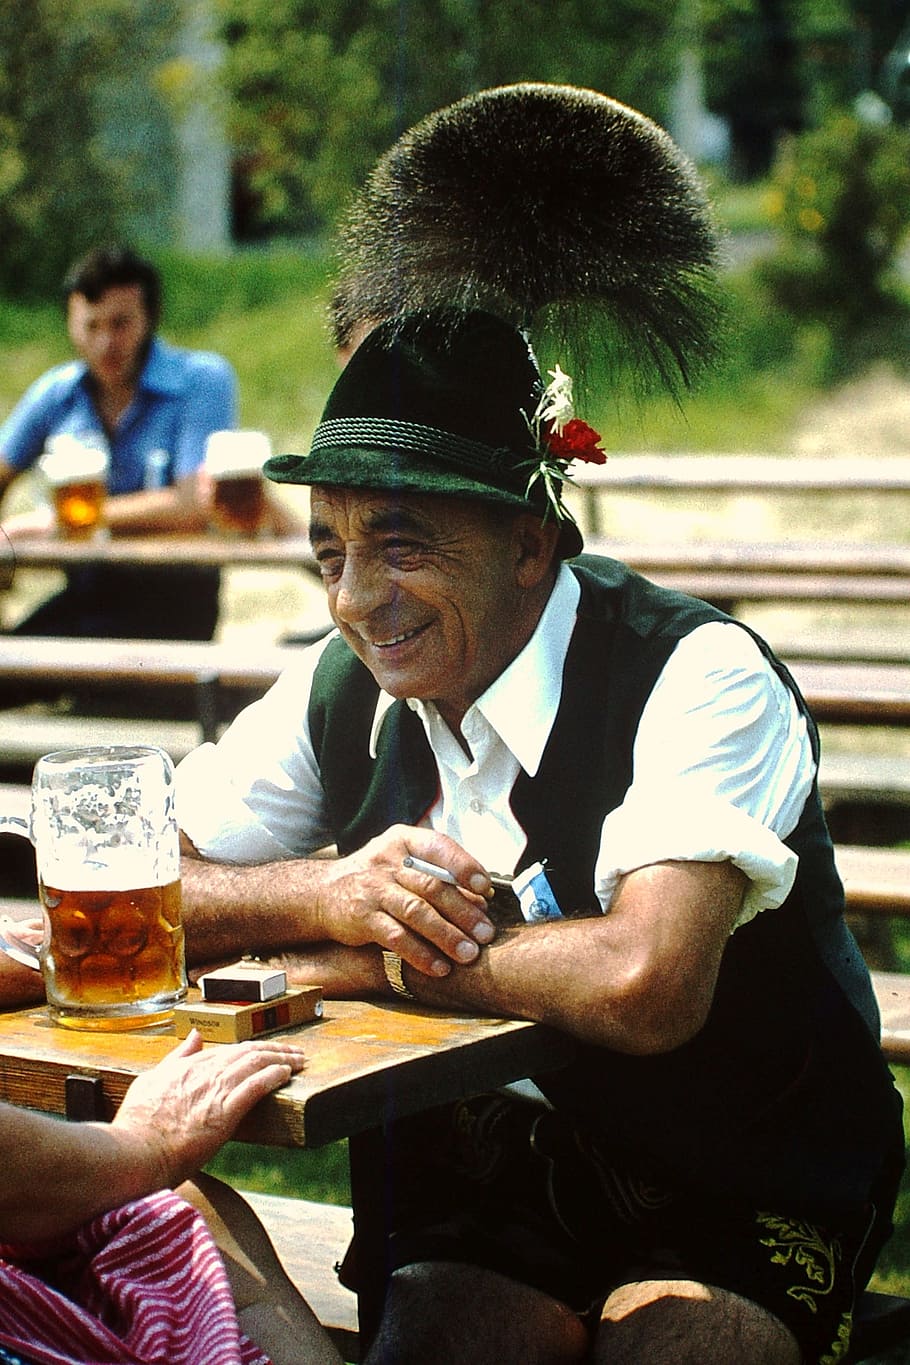 Baviera, Traje, Alfândega, Chapéu, Homem, tradição, humano, trachtenhut, bávaro, cerveja - Álcool